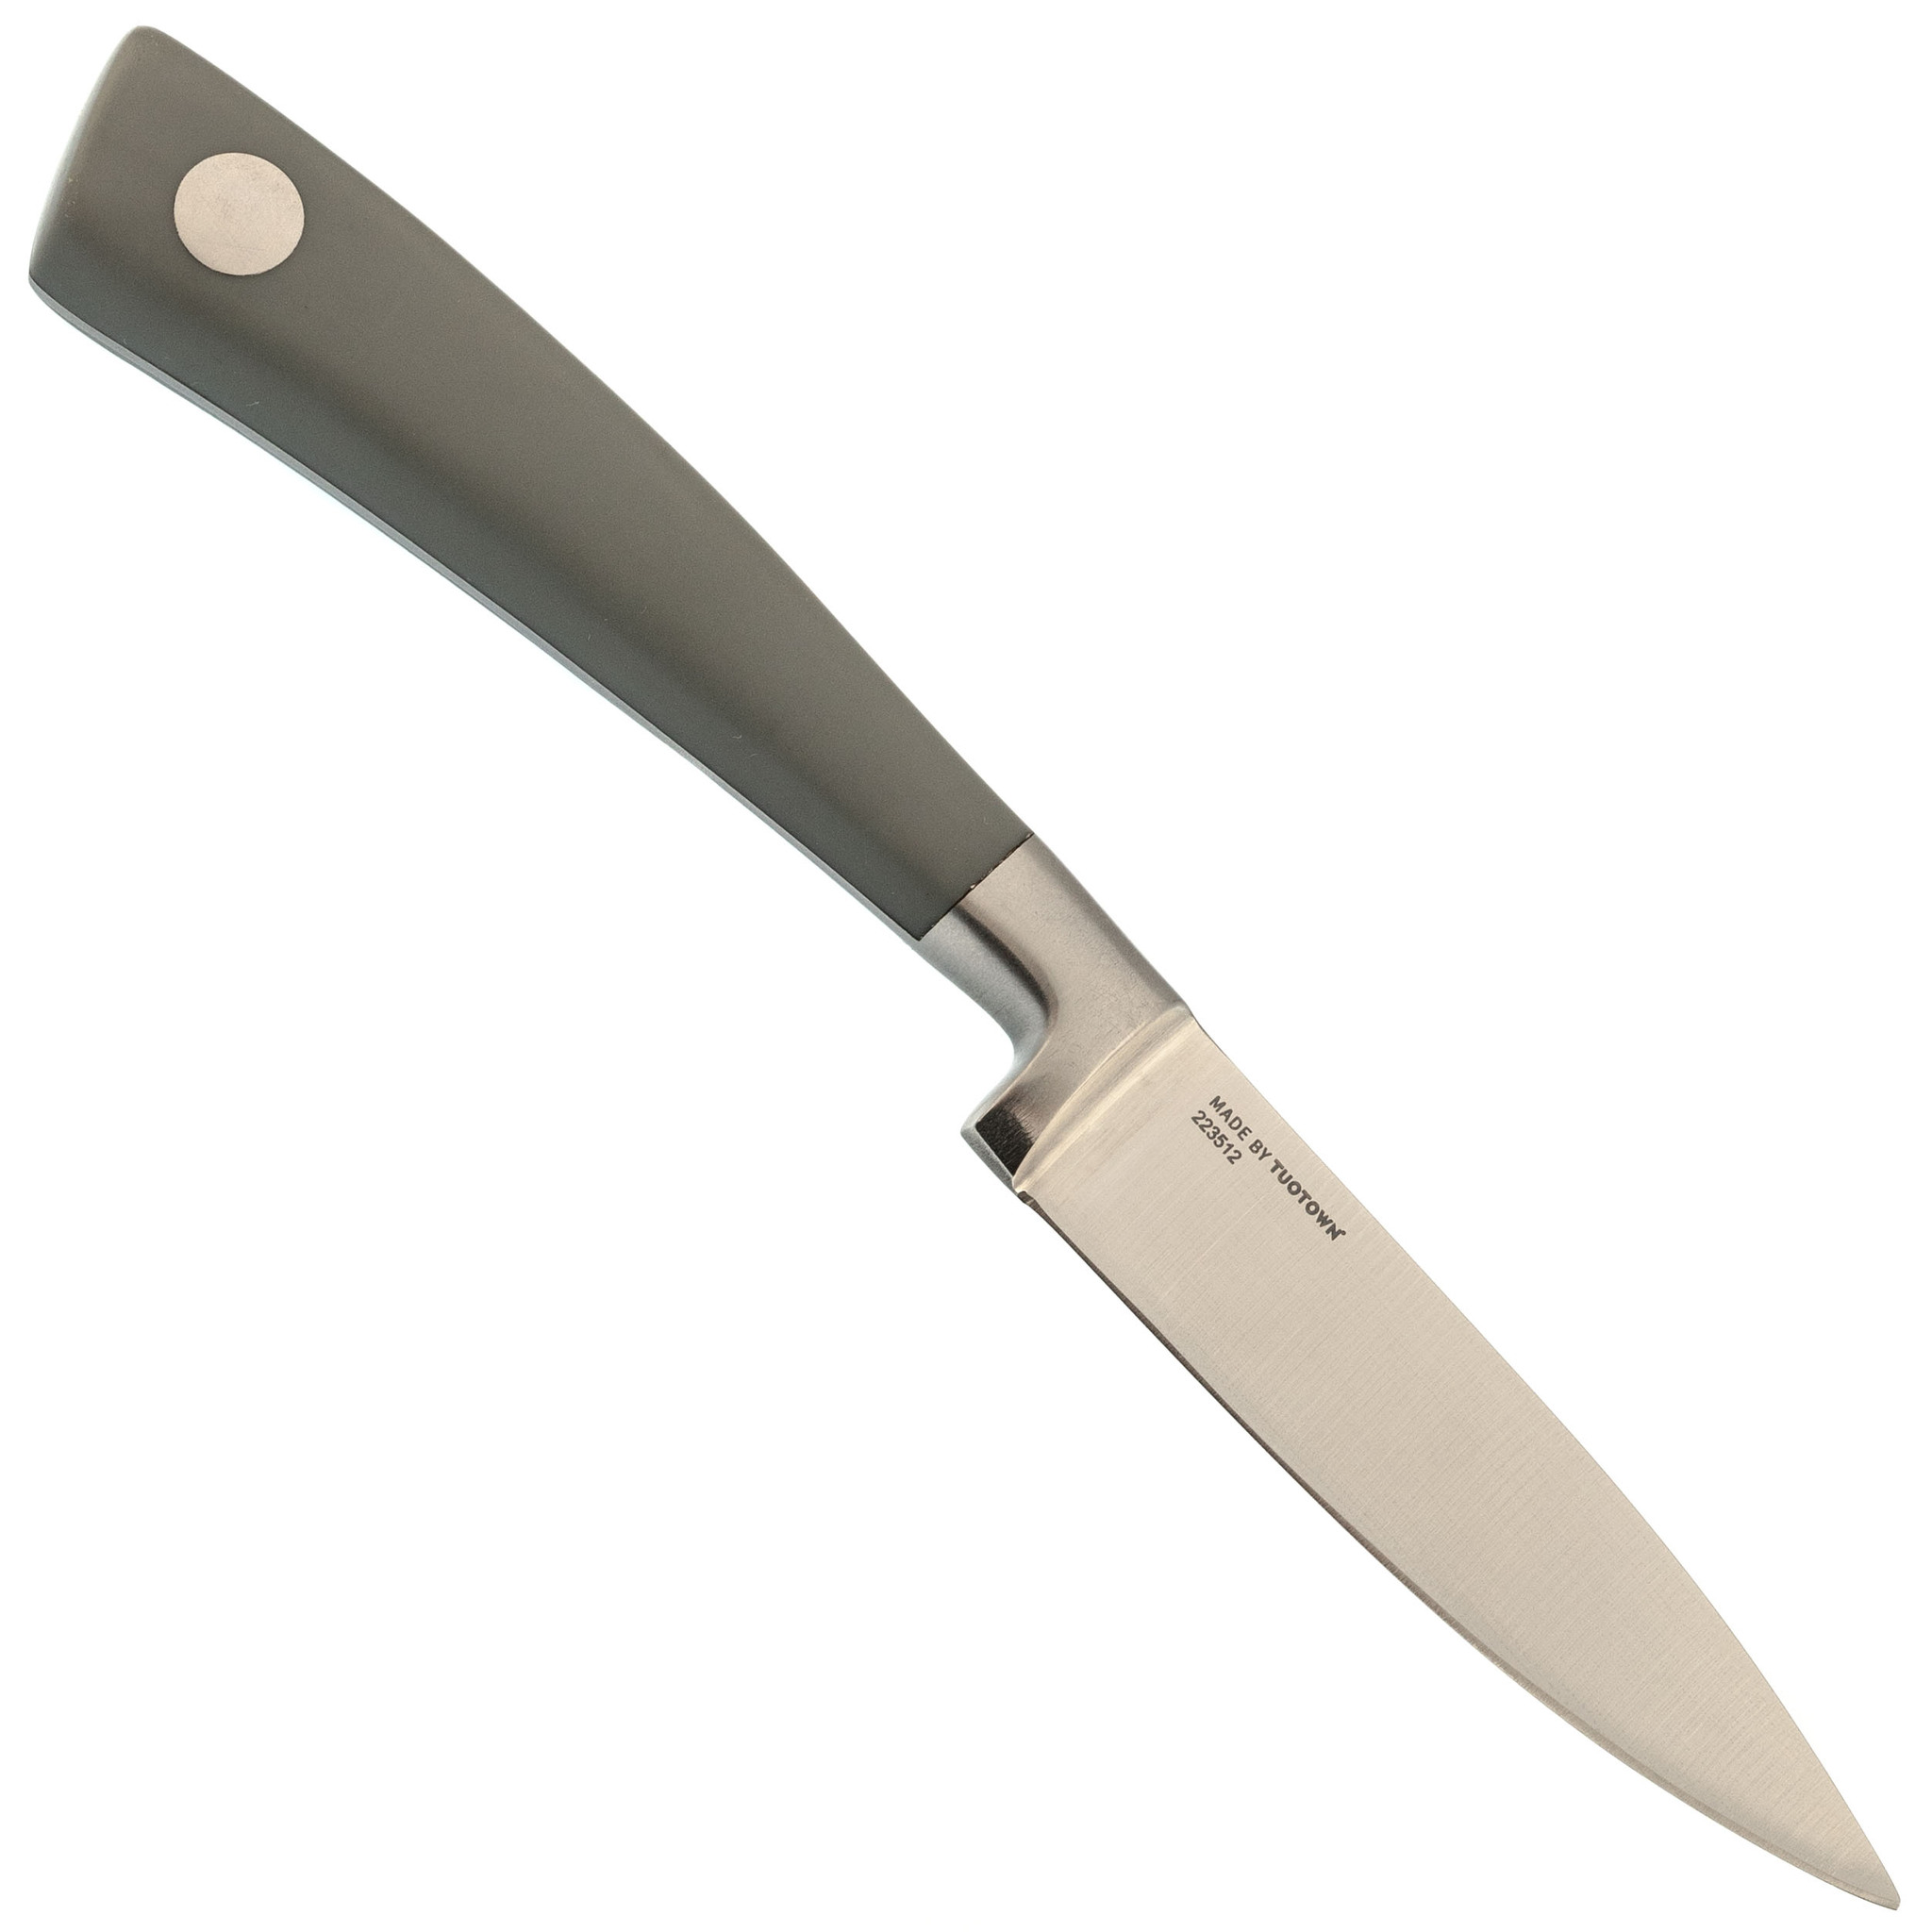 Кухонный нож овощной Tuotown, сталь 1.4116, пластик - фото 4